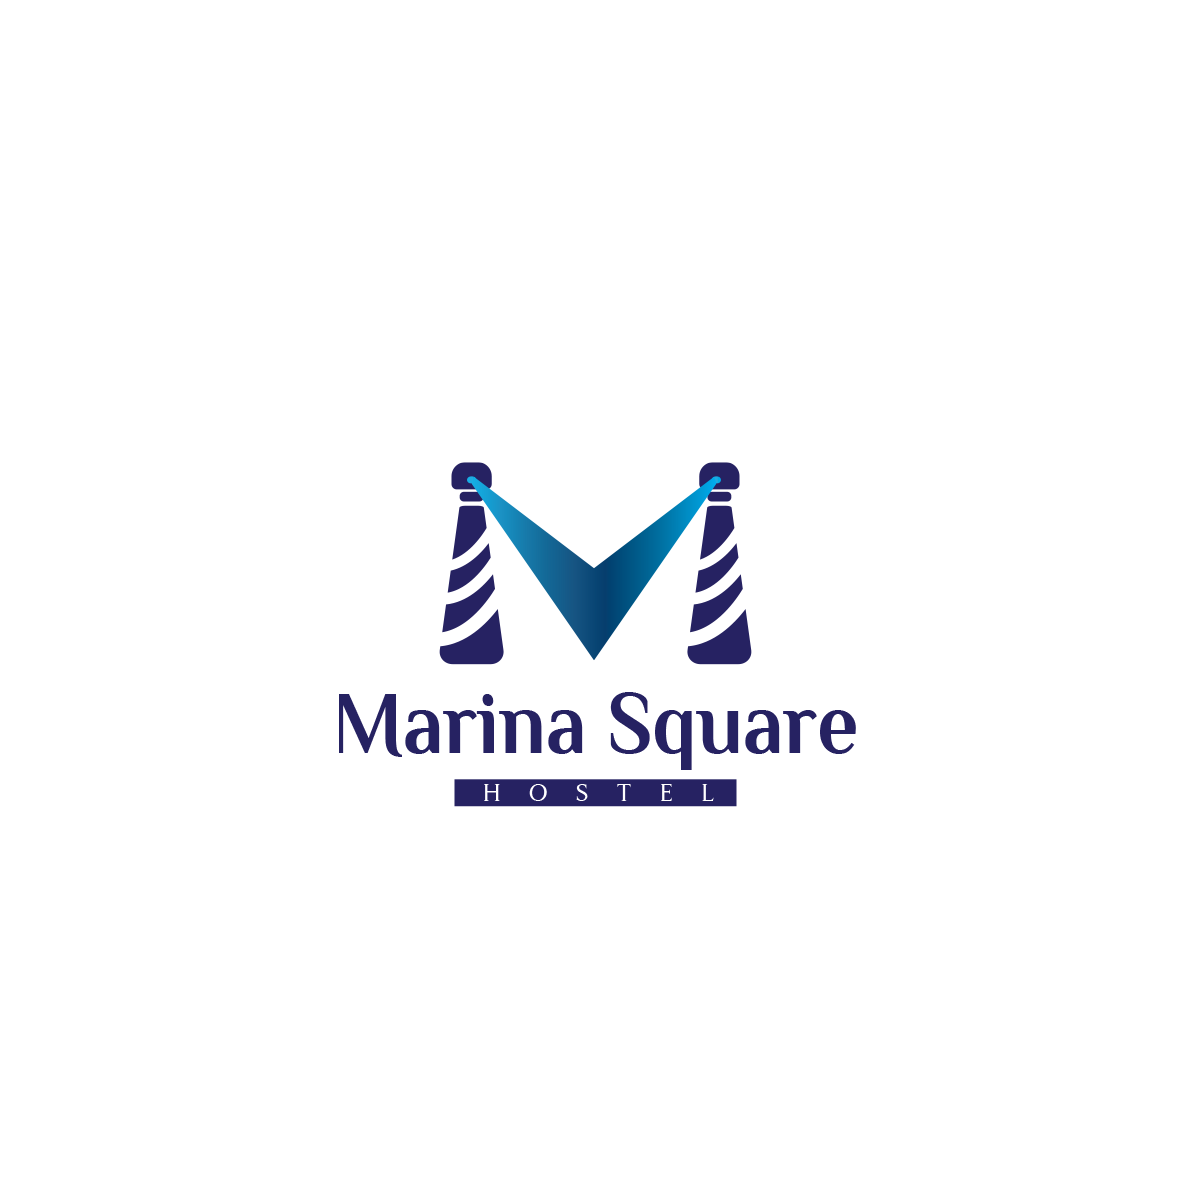 Marina Square HOSTEL